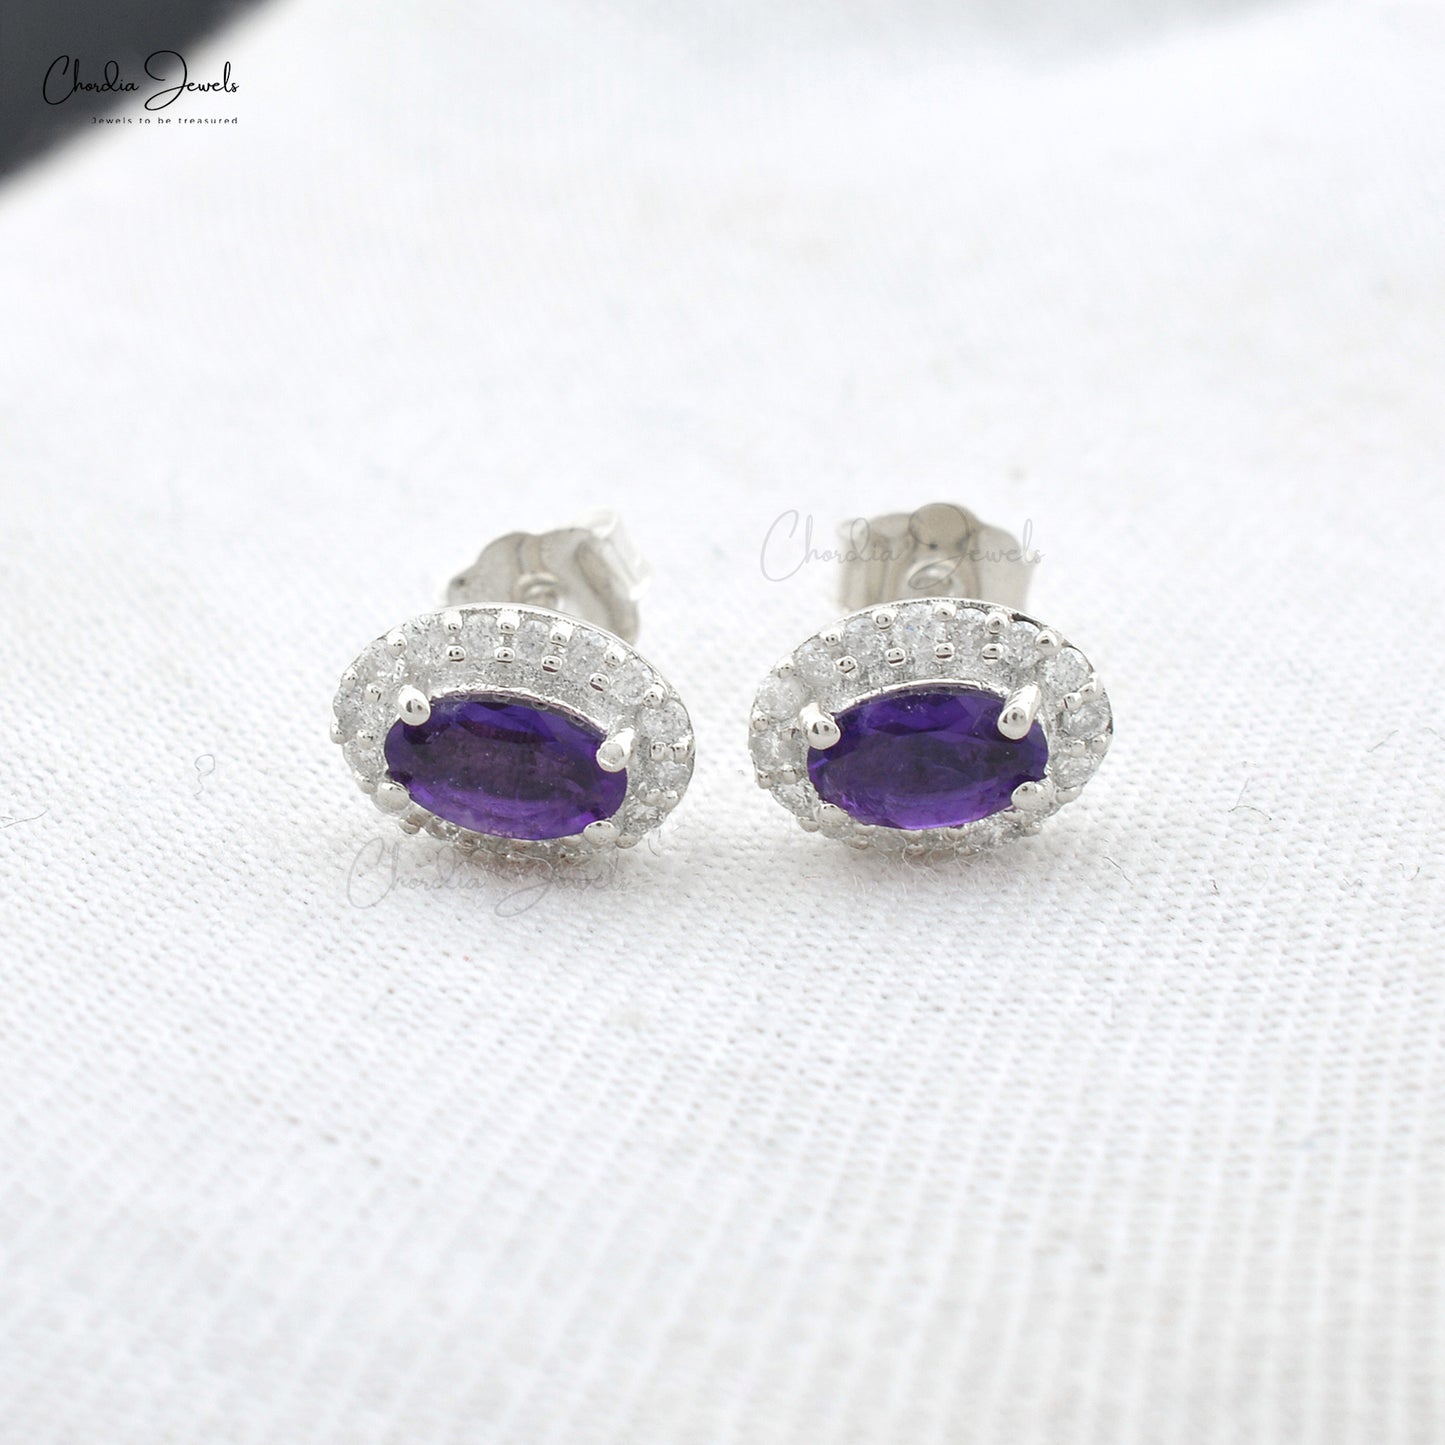 Real 14k White Gold Diamond Halo Wedding Earrings, 5x3mm Oval Cut 4-Prong Set Genuine Amethyst Earrings, 0.44 Ct February Birthstone Purple Gemstone Fine Jewelry